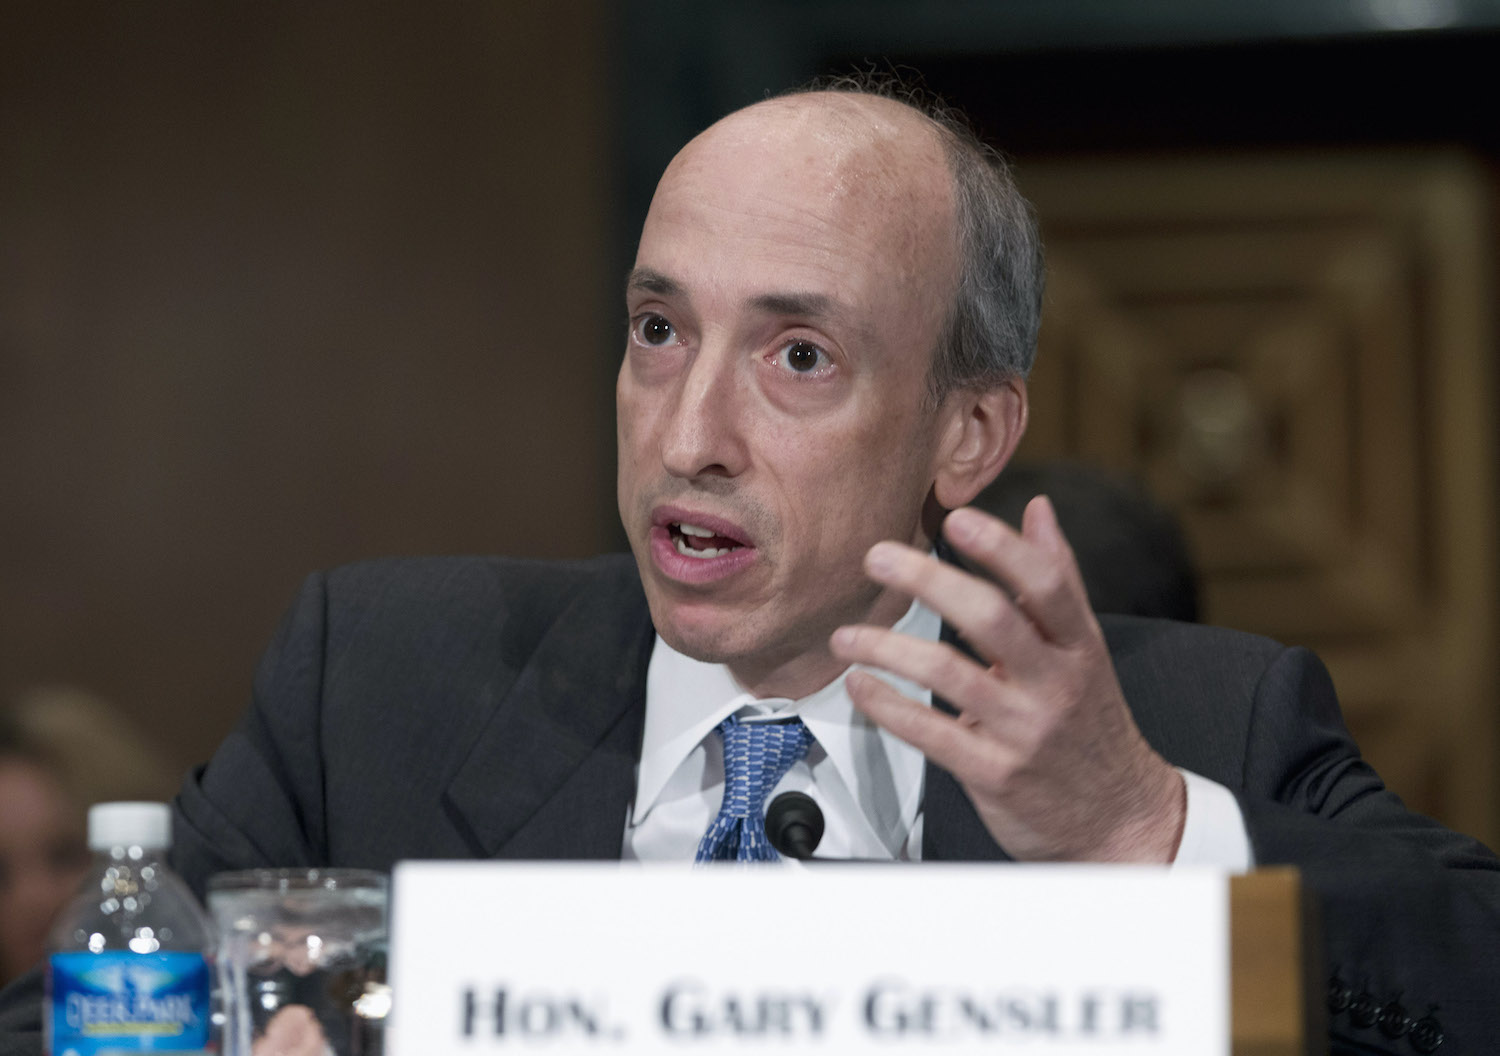 Pick of Gensler to run SEC signals tougher financial regulation